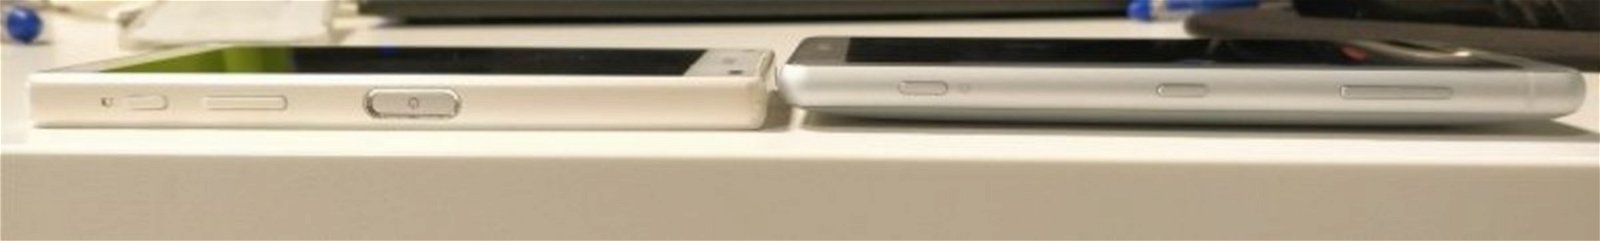 Sony Xperia XZ1 Compact vs Xperia XZ2 Compact